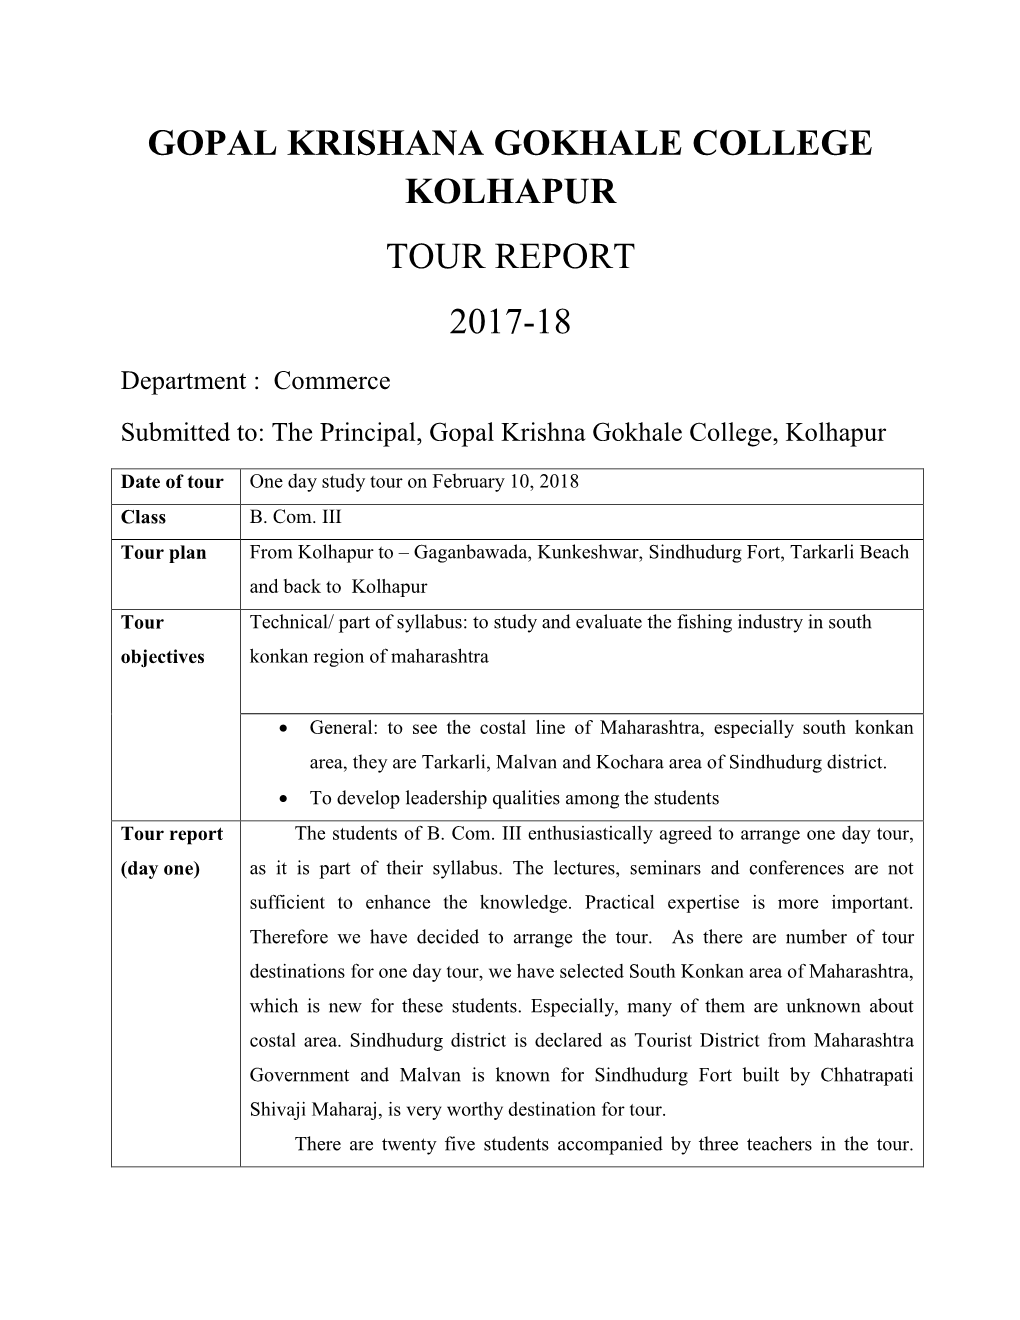 Gopal Krishana Gokhale College Kolhapur Tour Report 2017-18